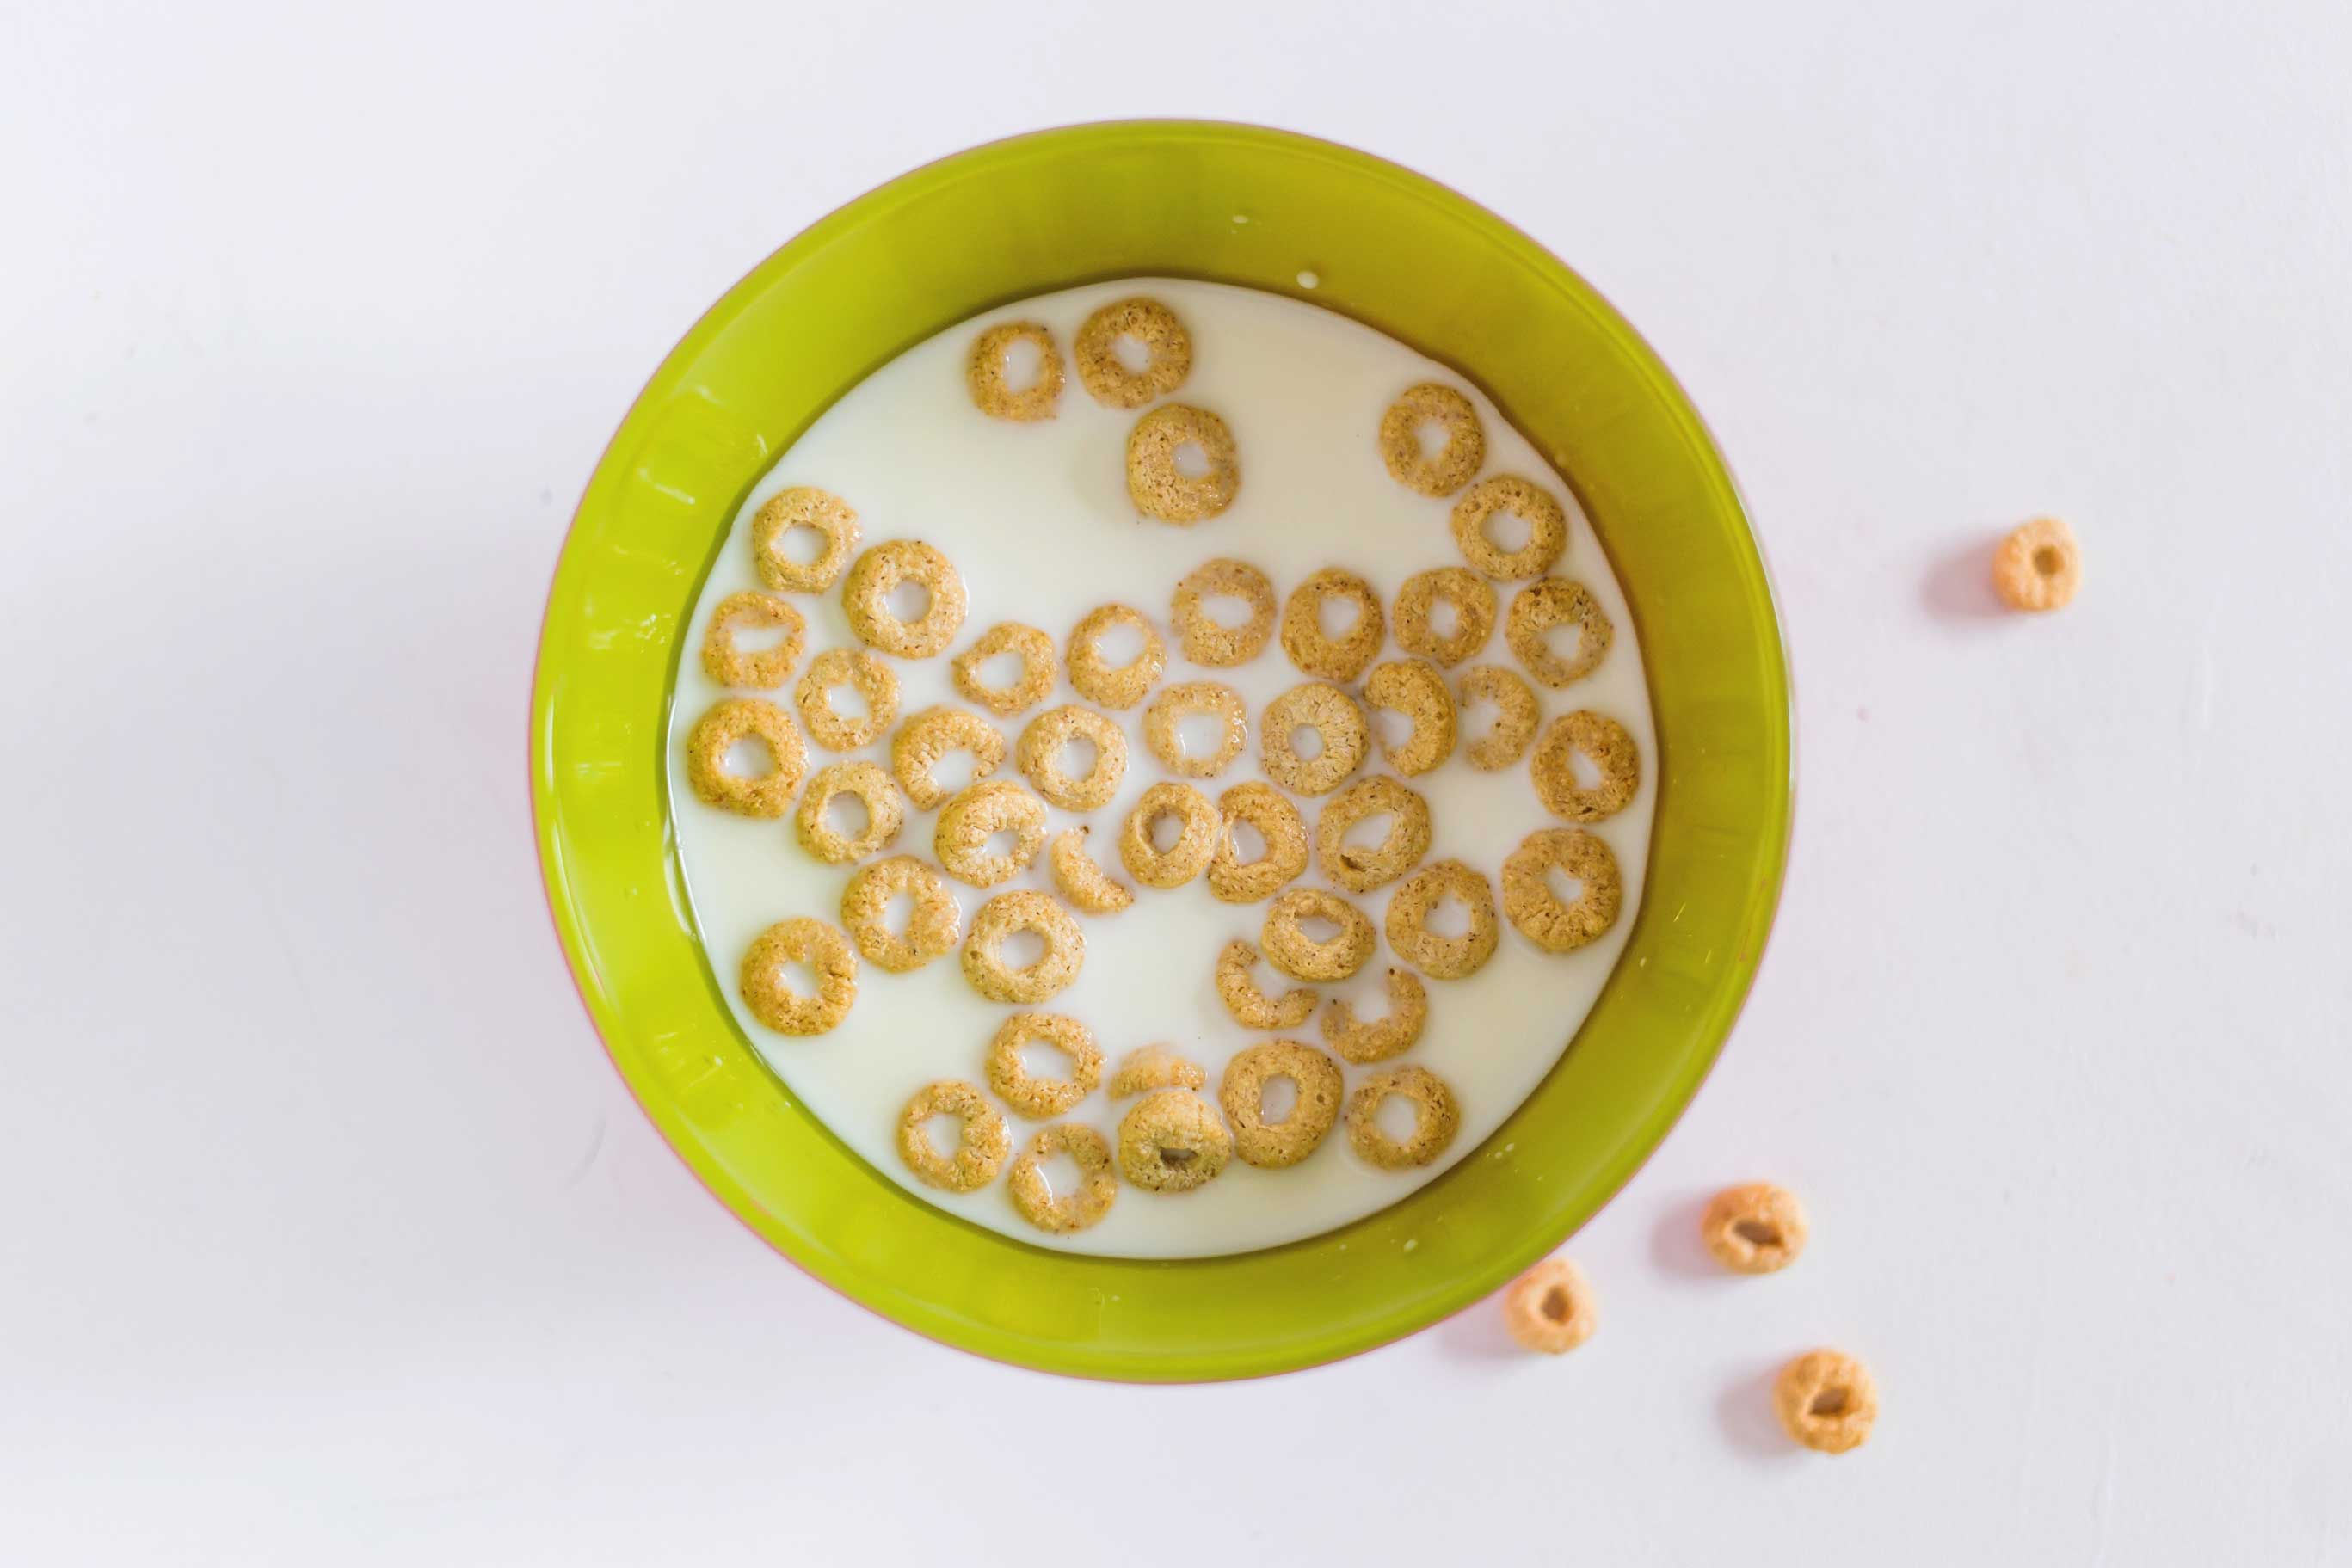 Hemp milk and cheerios in a bowl